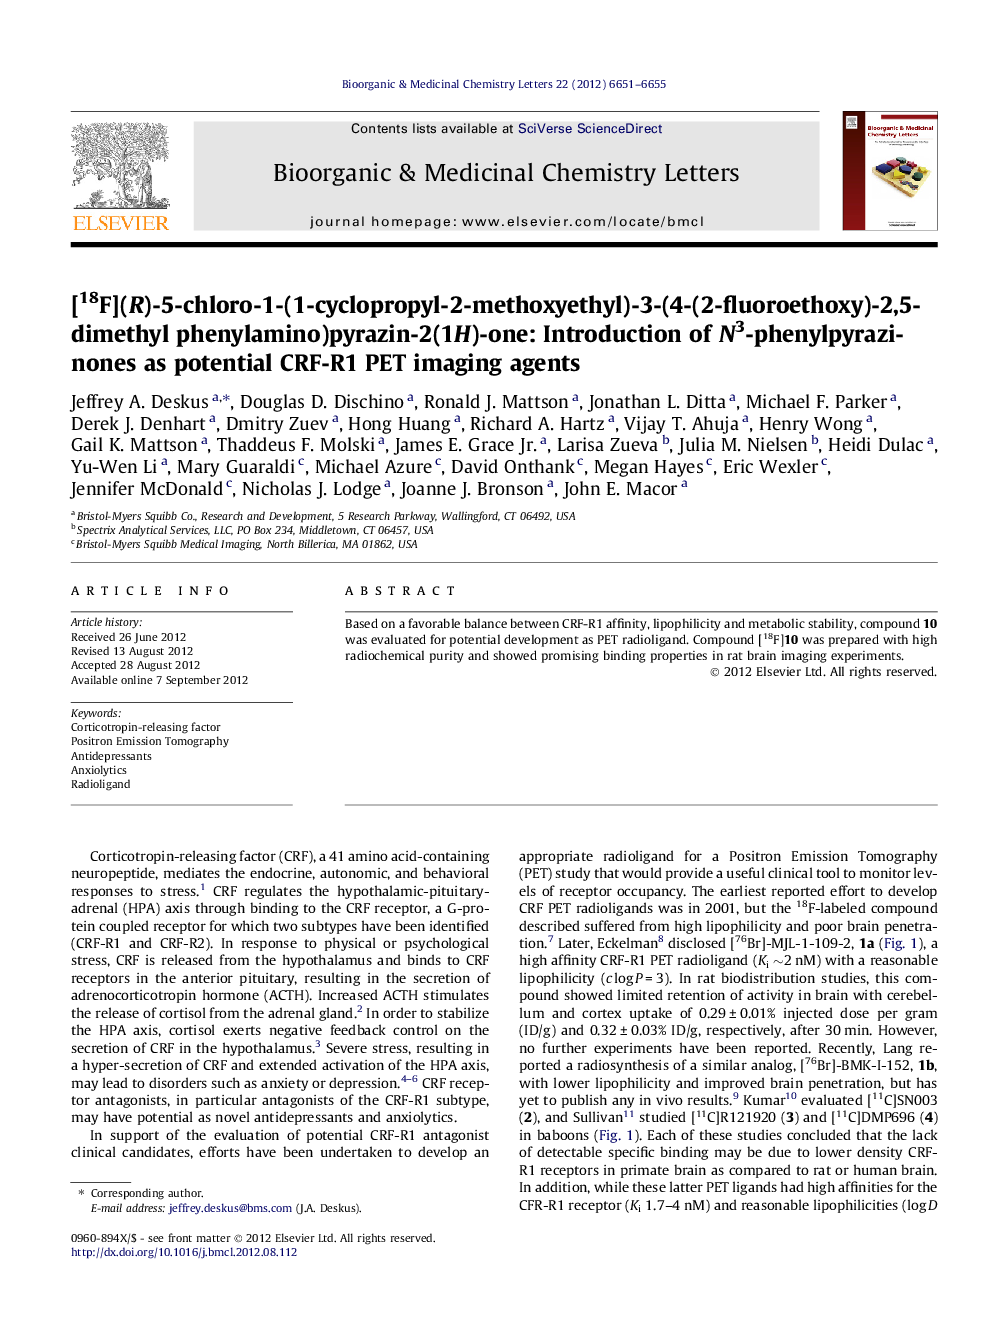 [18F](R)-5-chloro-1-(1-cyclopropyl-2-methoxyethyl)-3-(4-(2-fluoroethoxy)-2,5-dimethyl phenylamino)pyrazin-2(1H)-one: Introduction of N3-phenylpyrazinones as potential CRF-R1 PET imaging agents